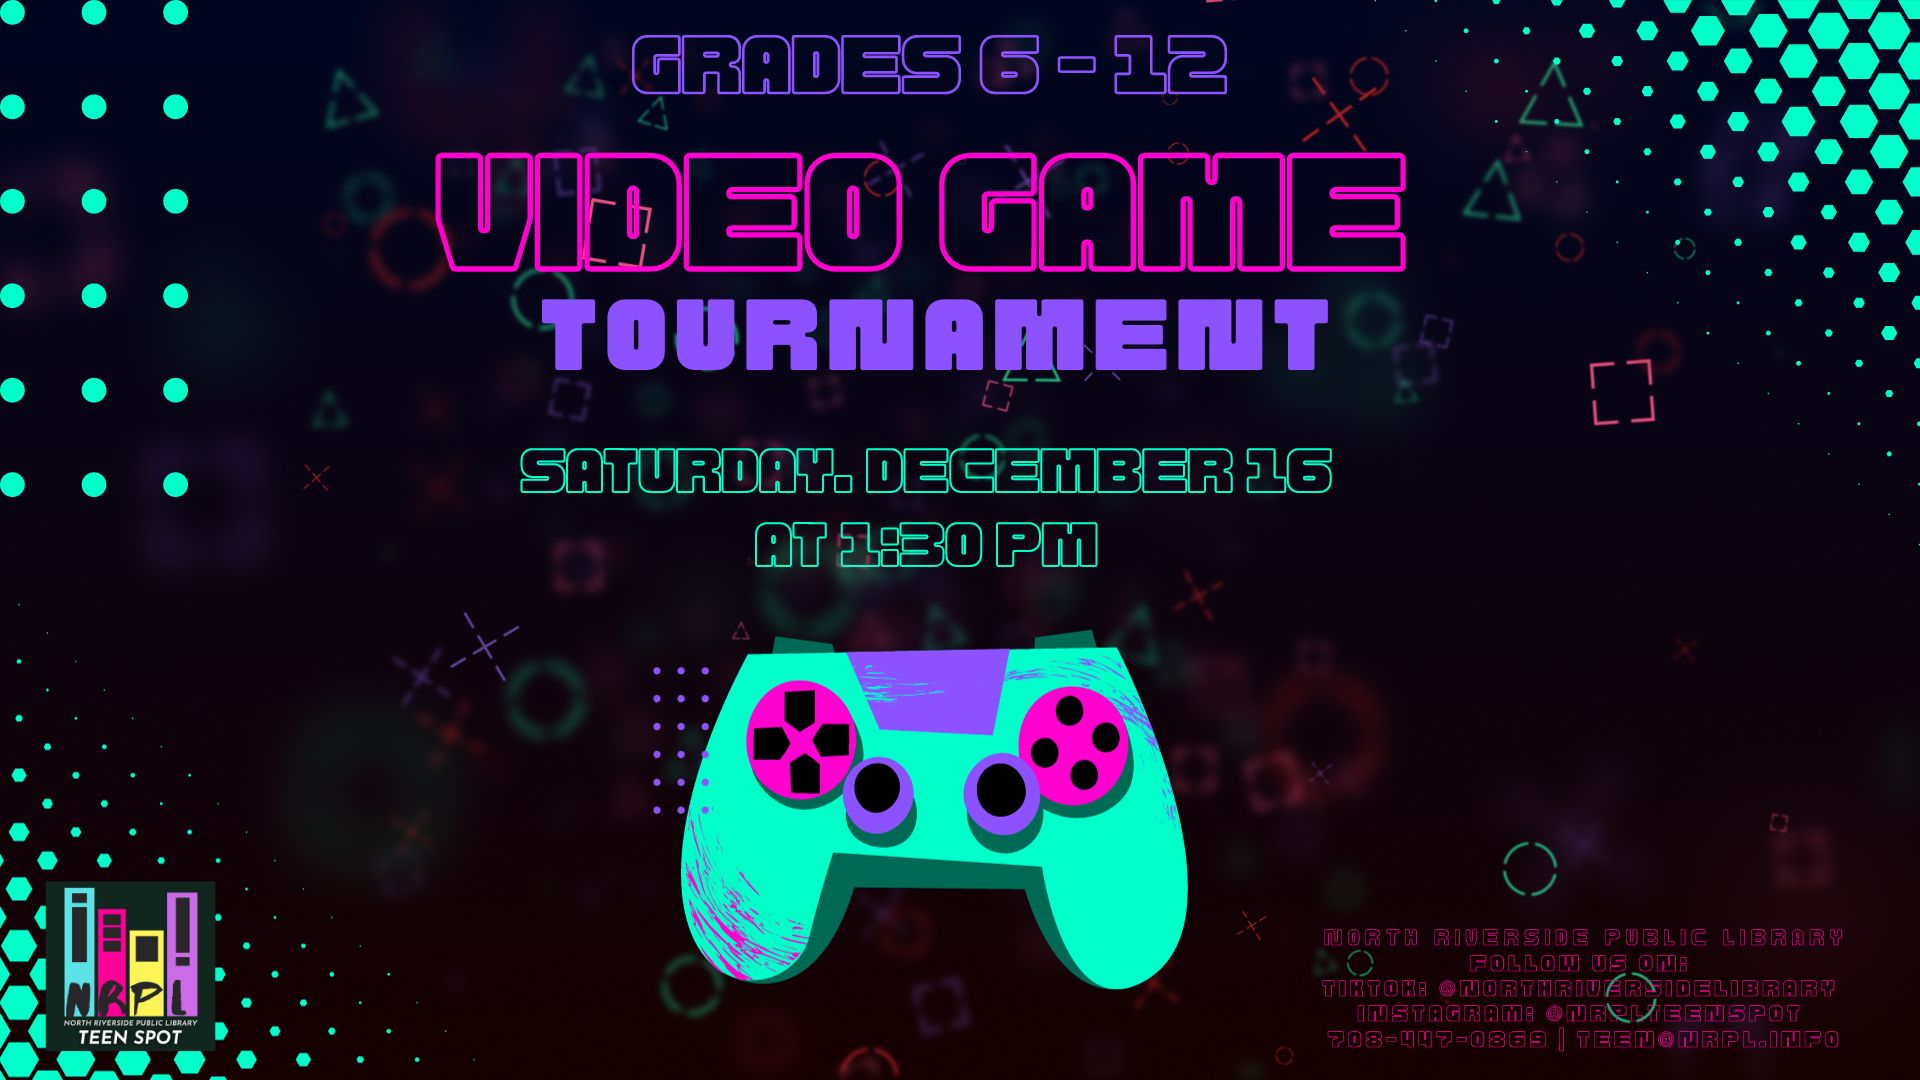 Video gam tournament program flyer for teens